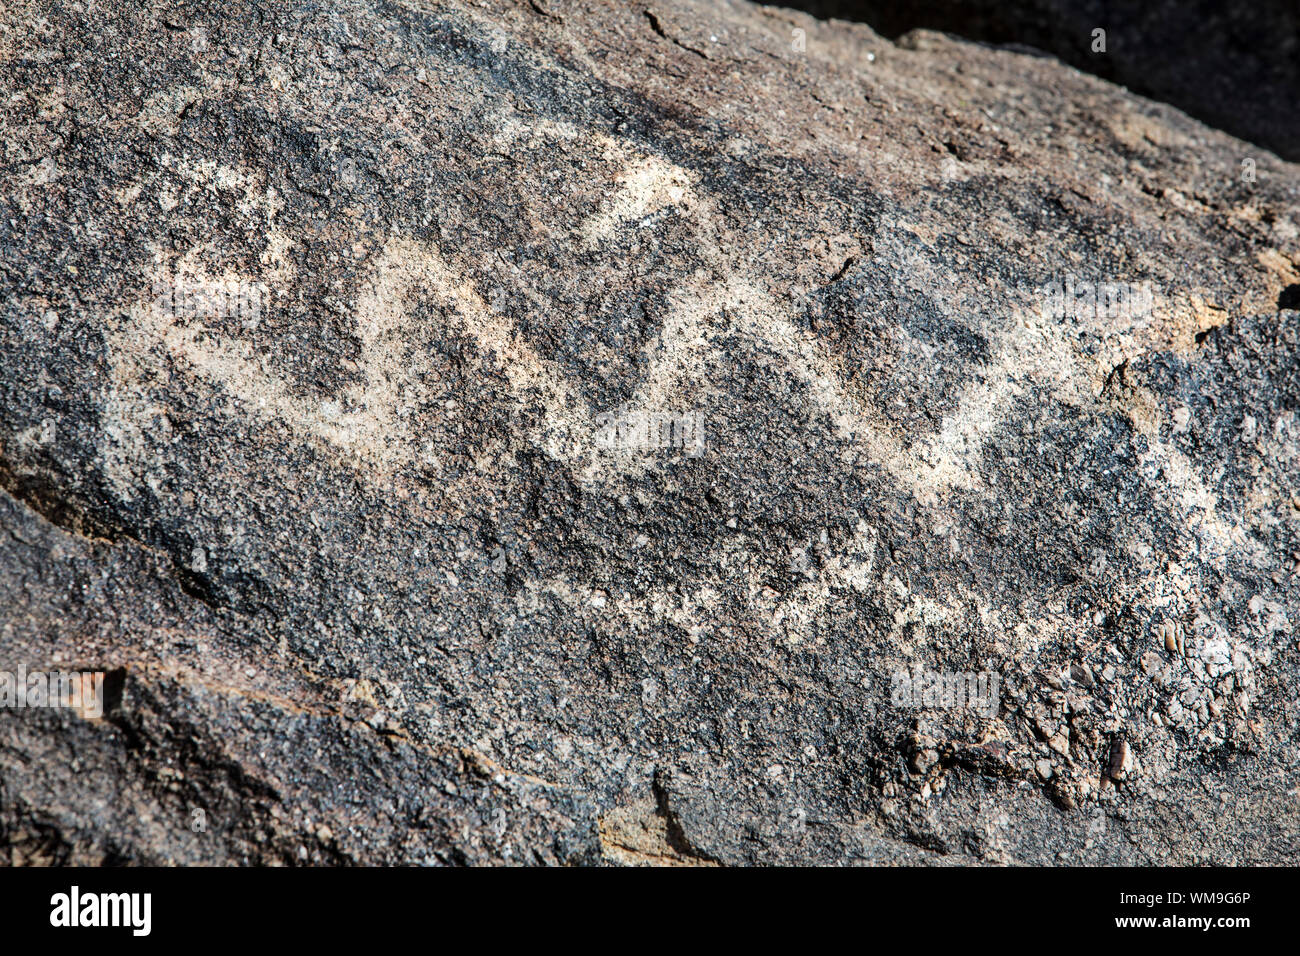 Native American Petroglyph im Canyon in der Nähe von Chlorid Arizona Stockfoto